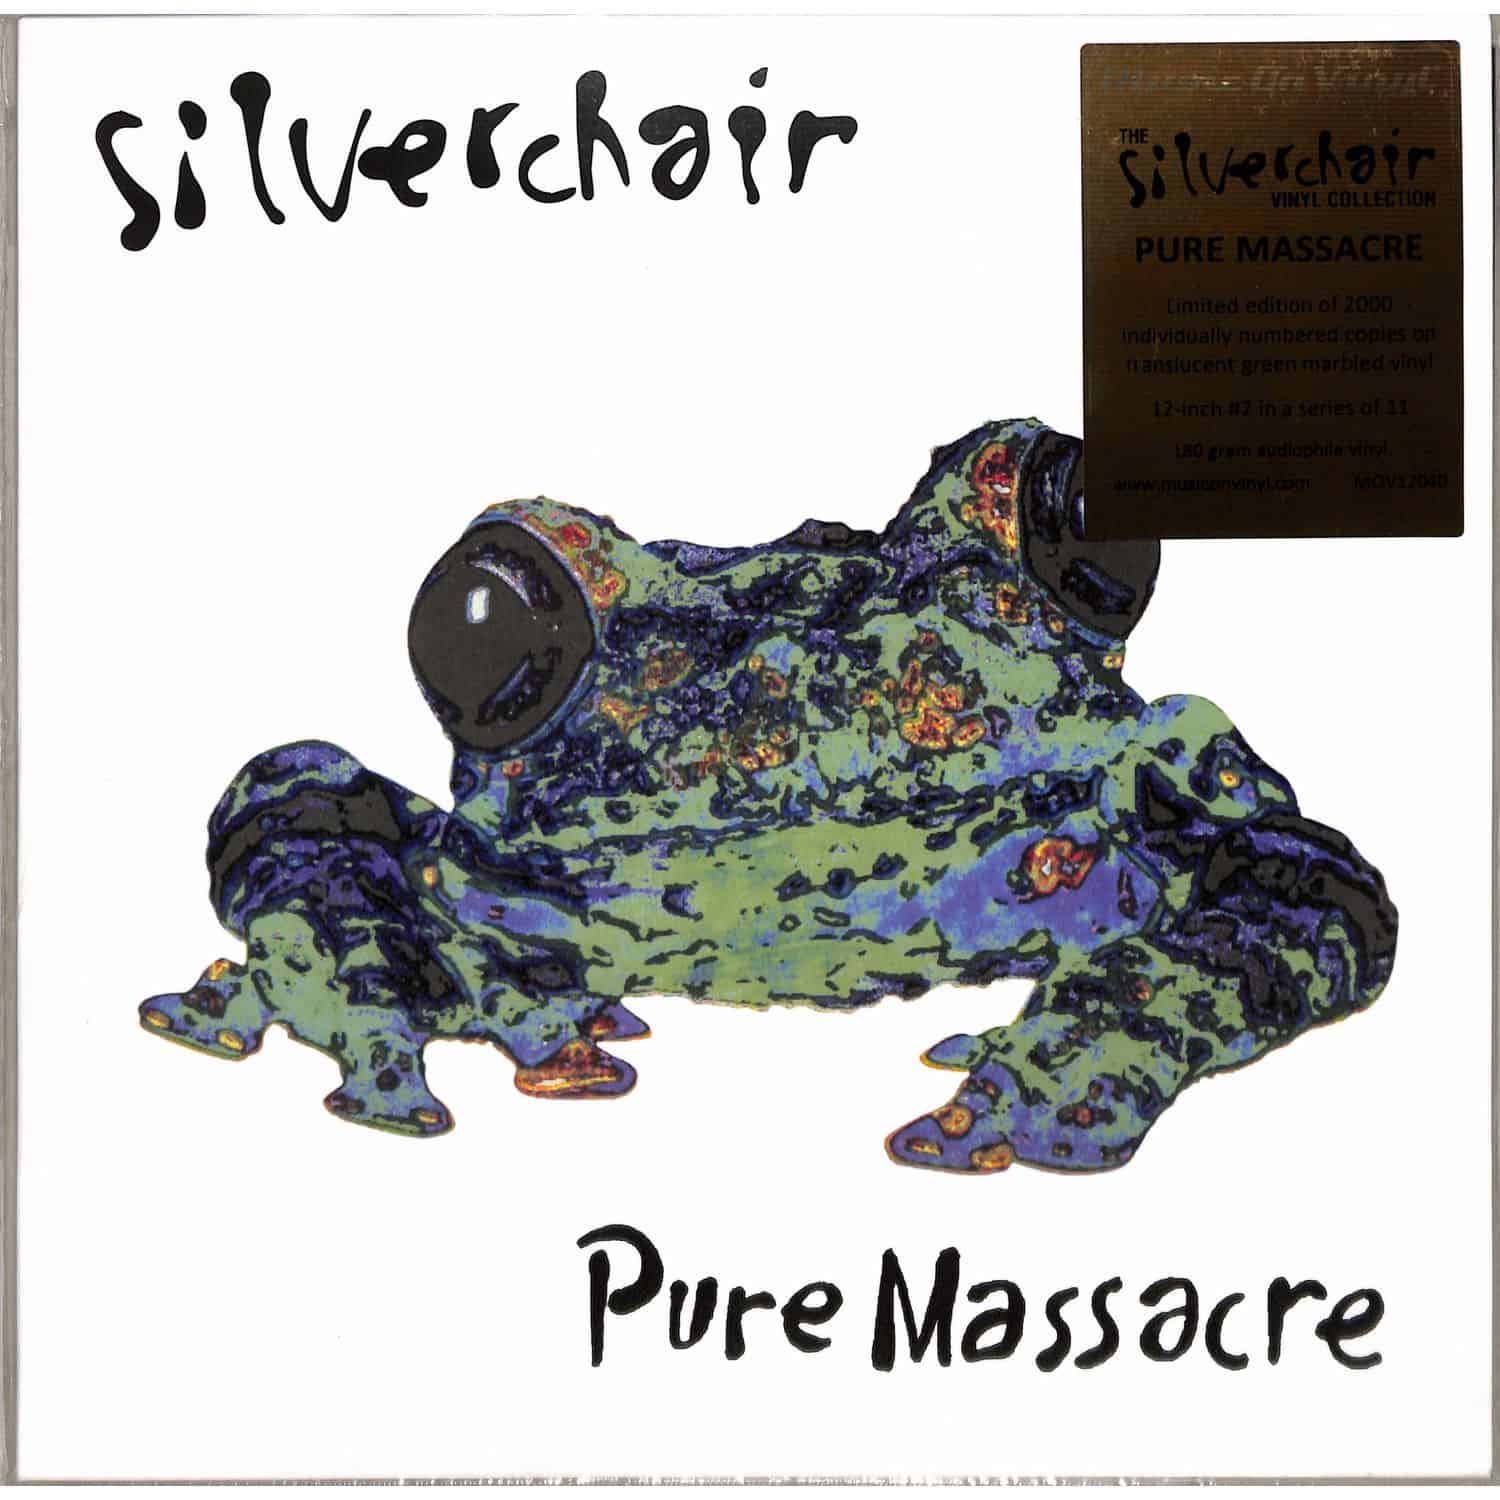 Silverchair - PURE MASSACRE 